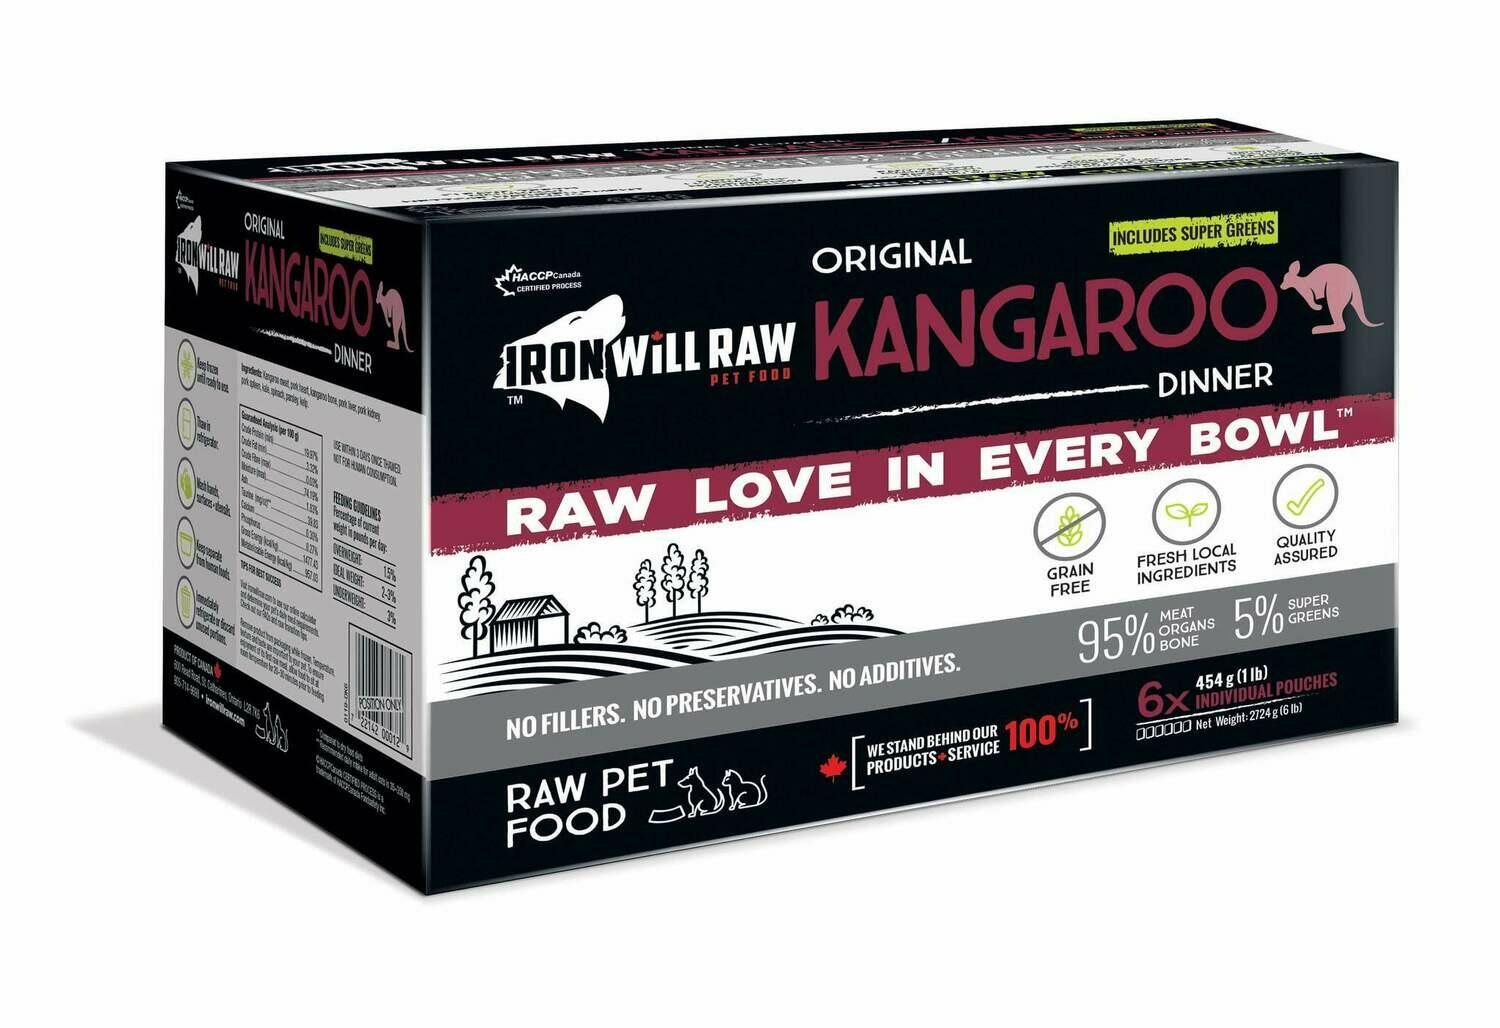 Iron Will Raw - Original Kangaroo - 6lbs (1lb x 6)